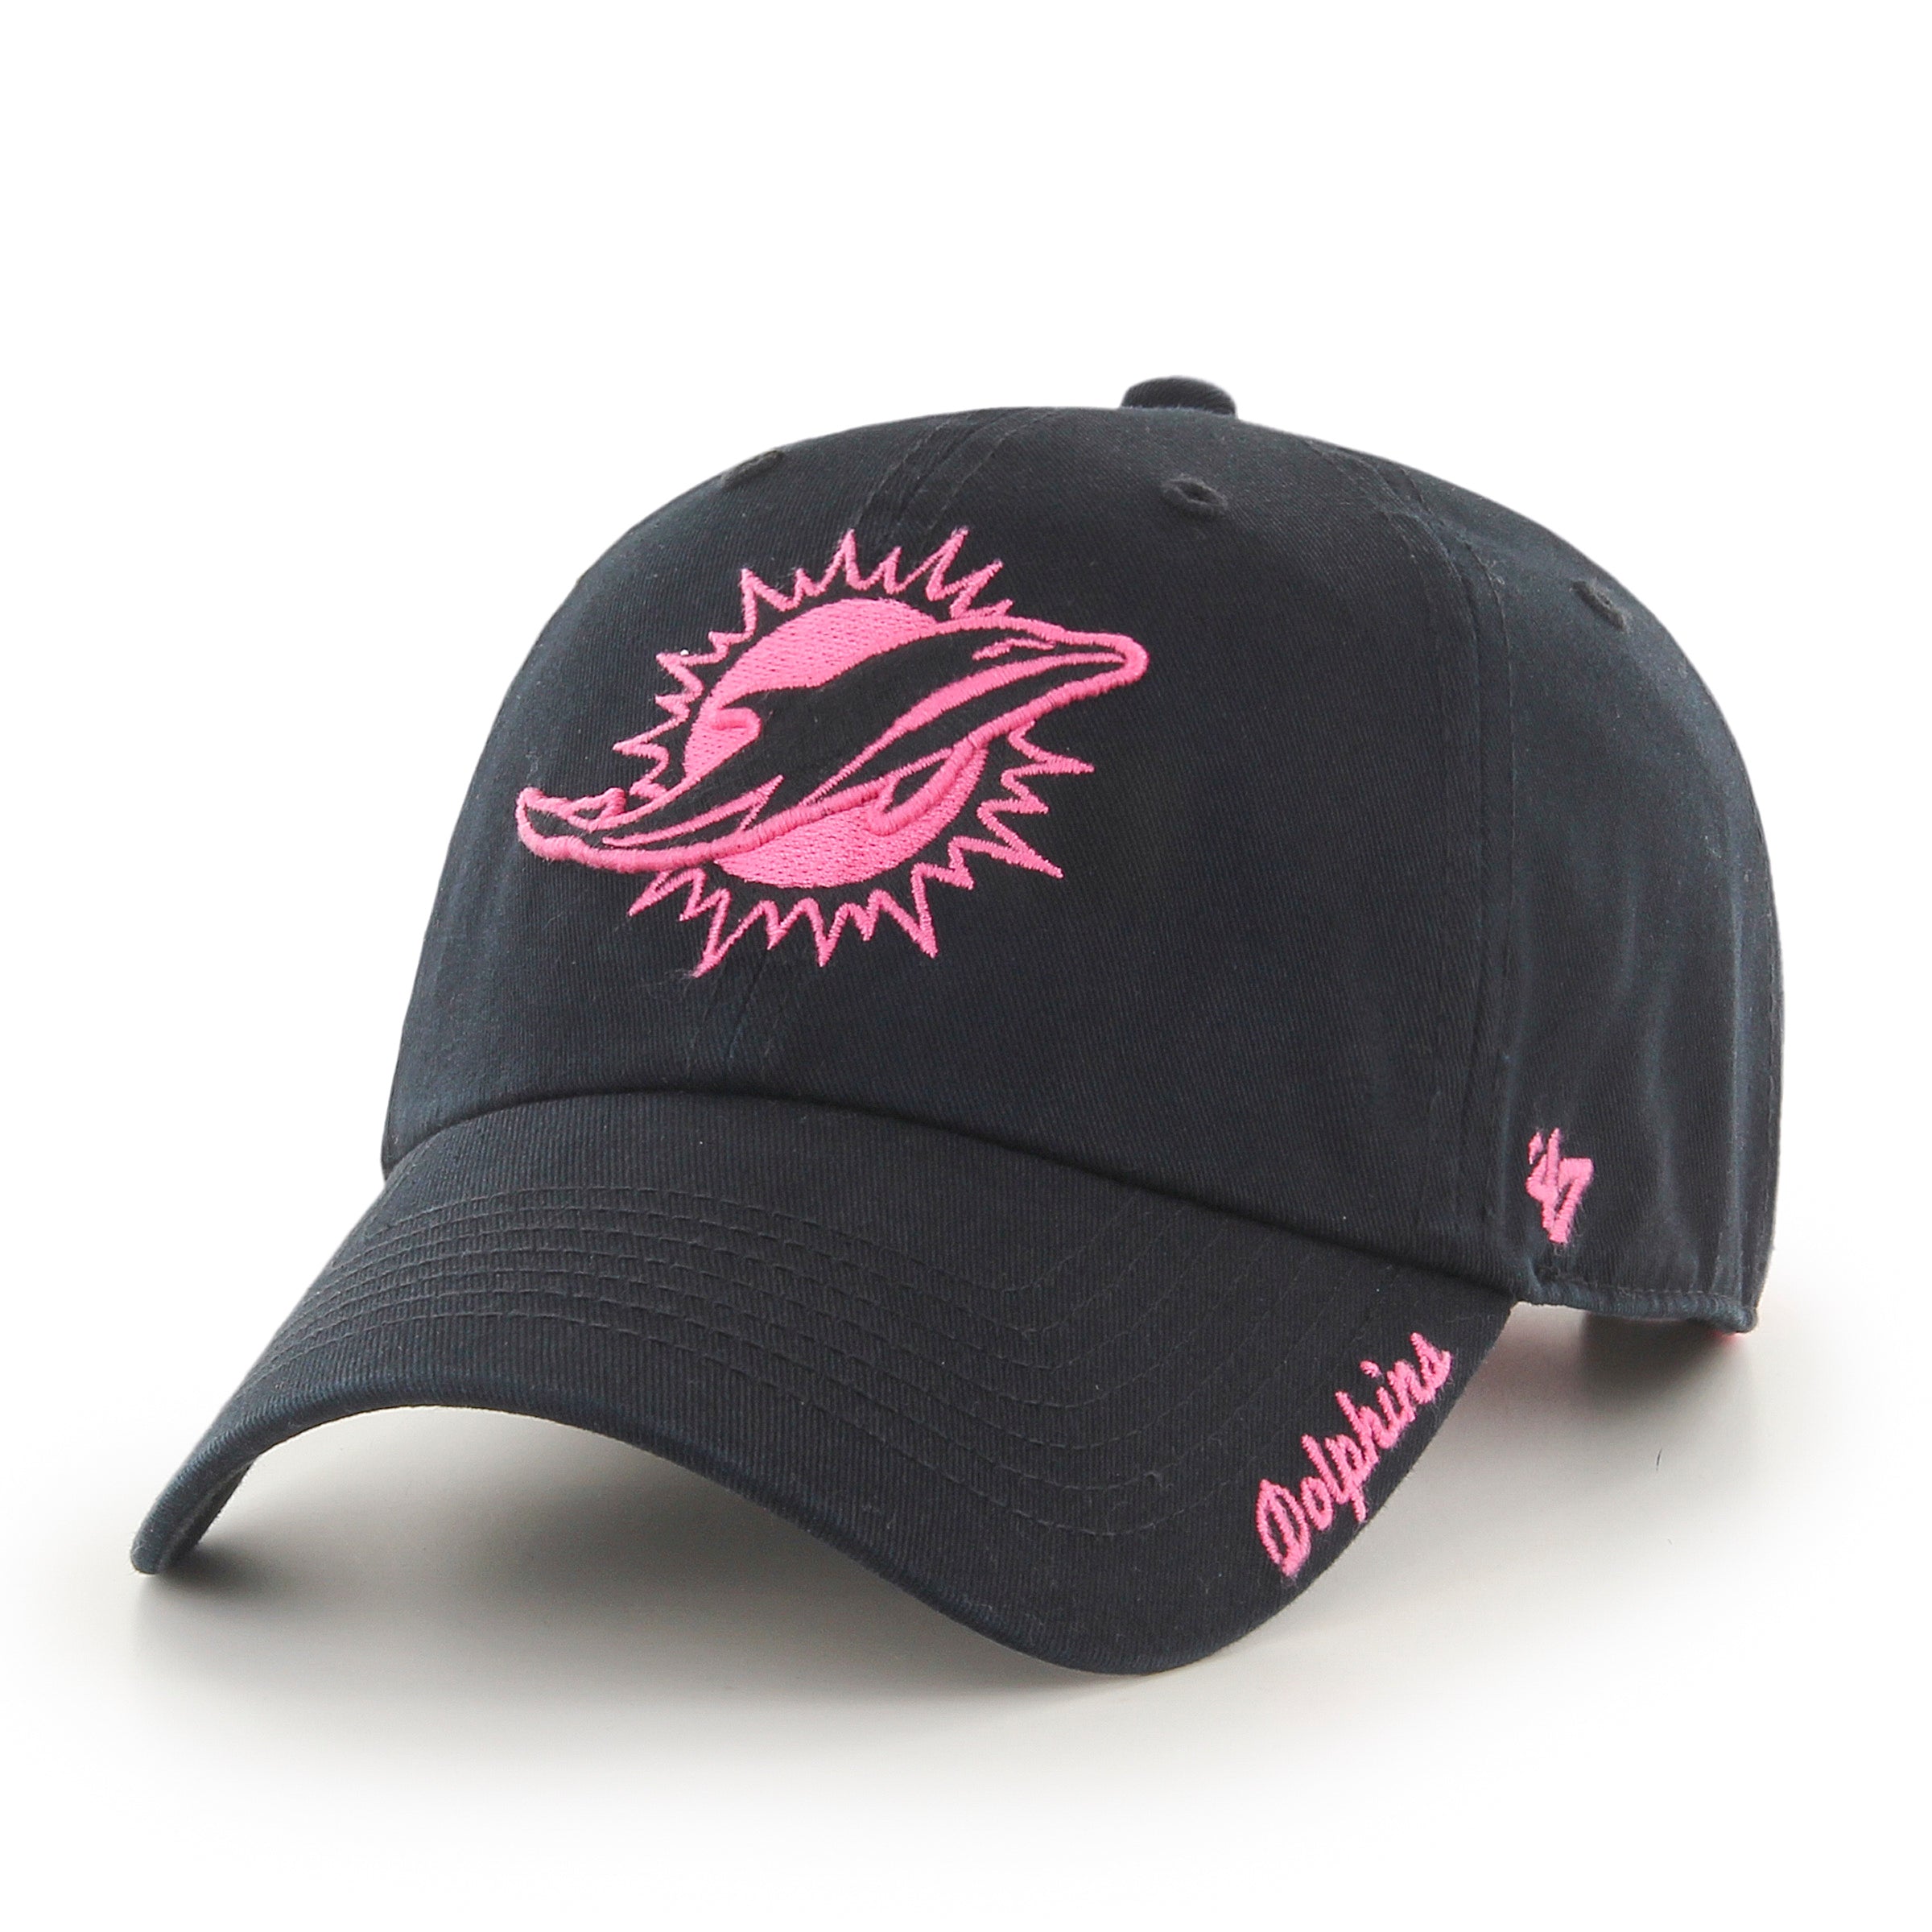 Miami Dolphins 47 Brand Womens Skyler Clean Up Adjustable Hat - Black/Pink